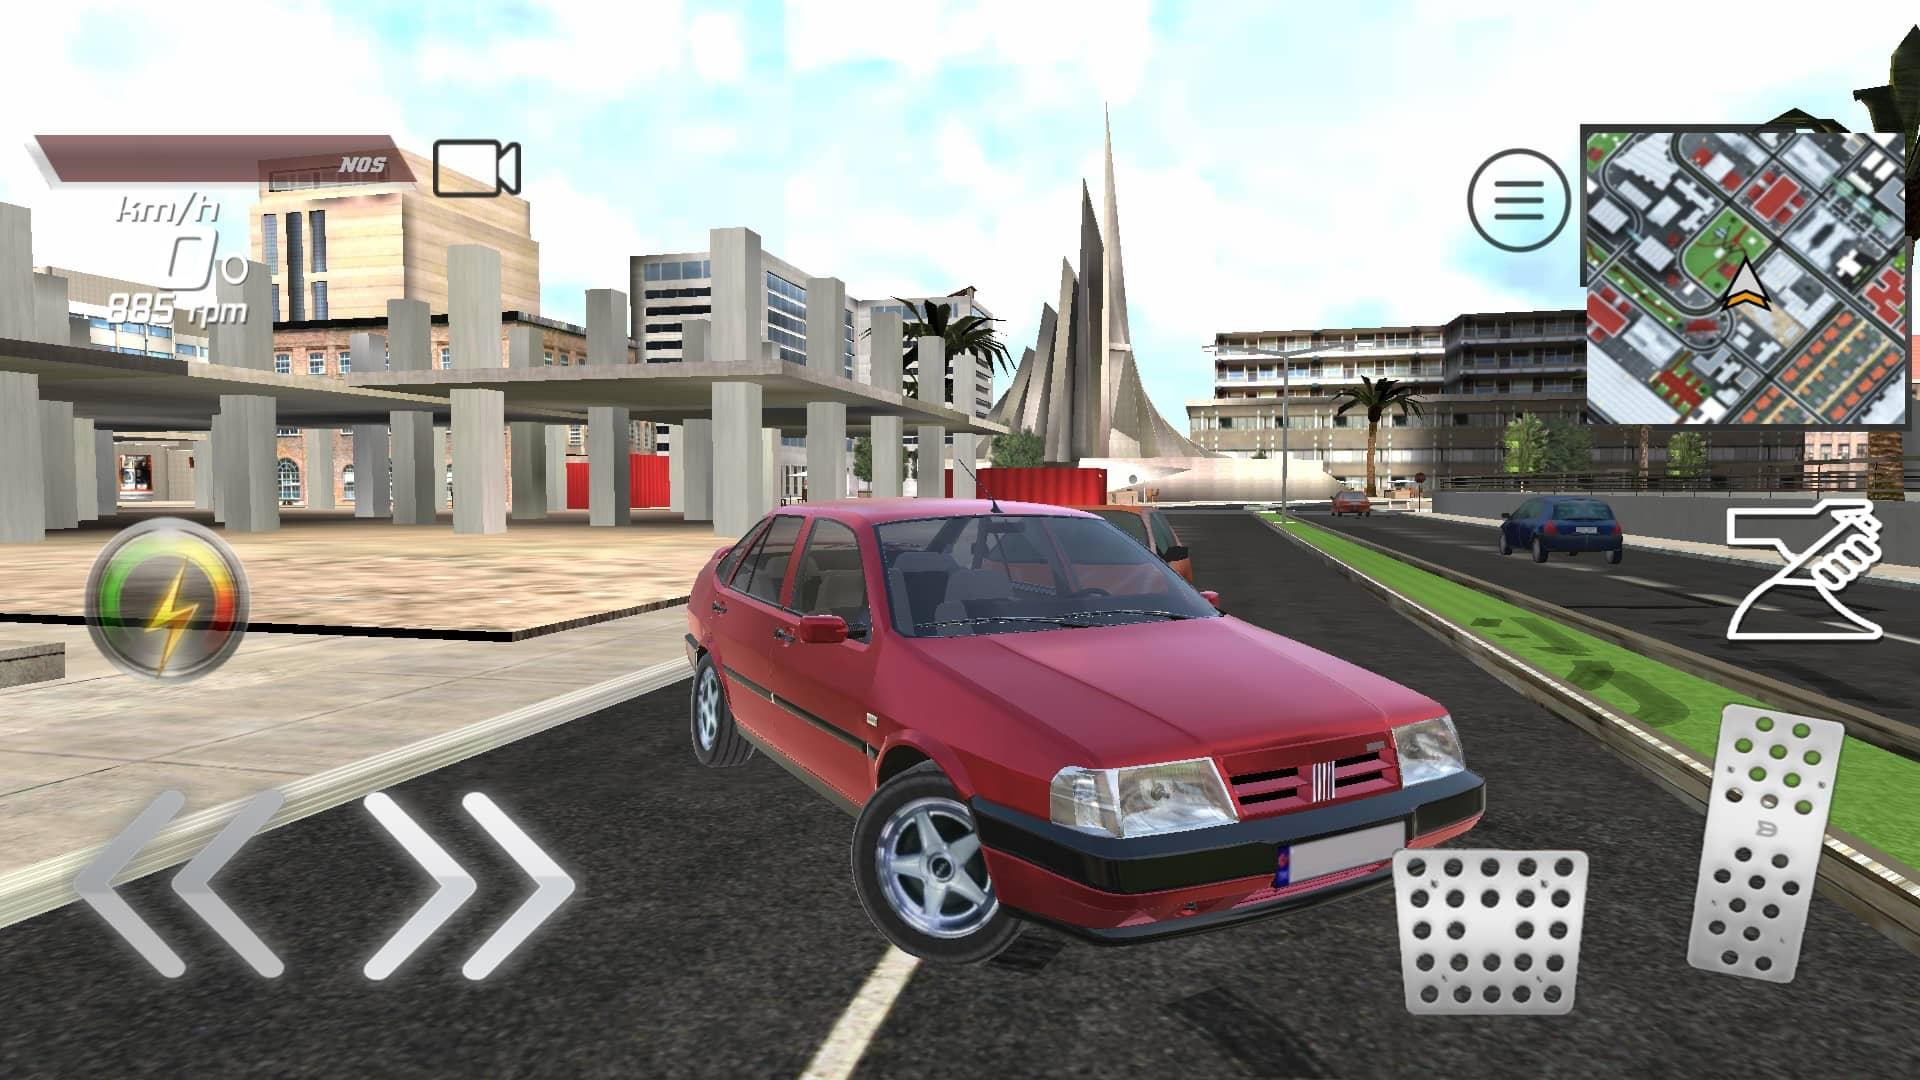 Tempra - City Simulation, Quests and Parking 1.7 Screenshot 23